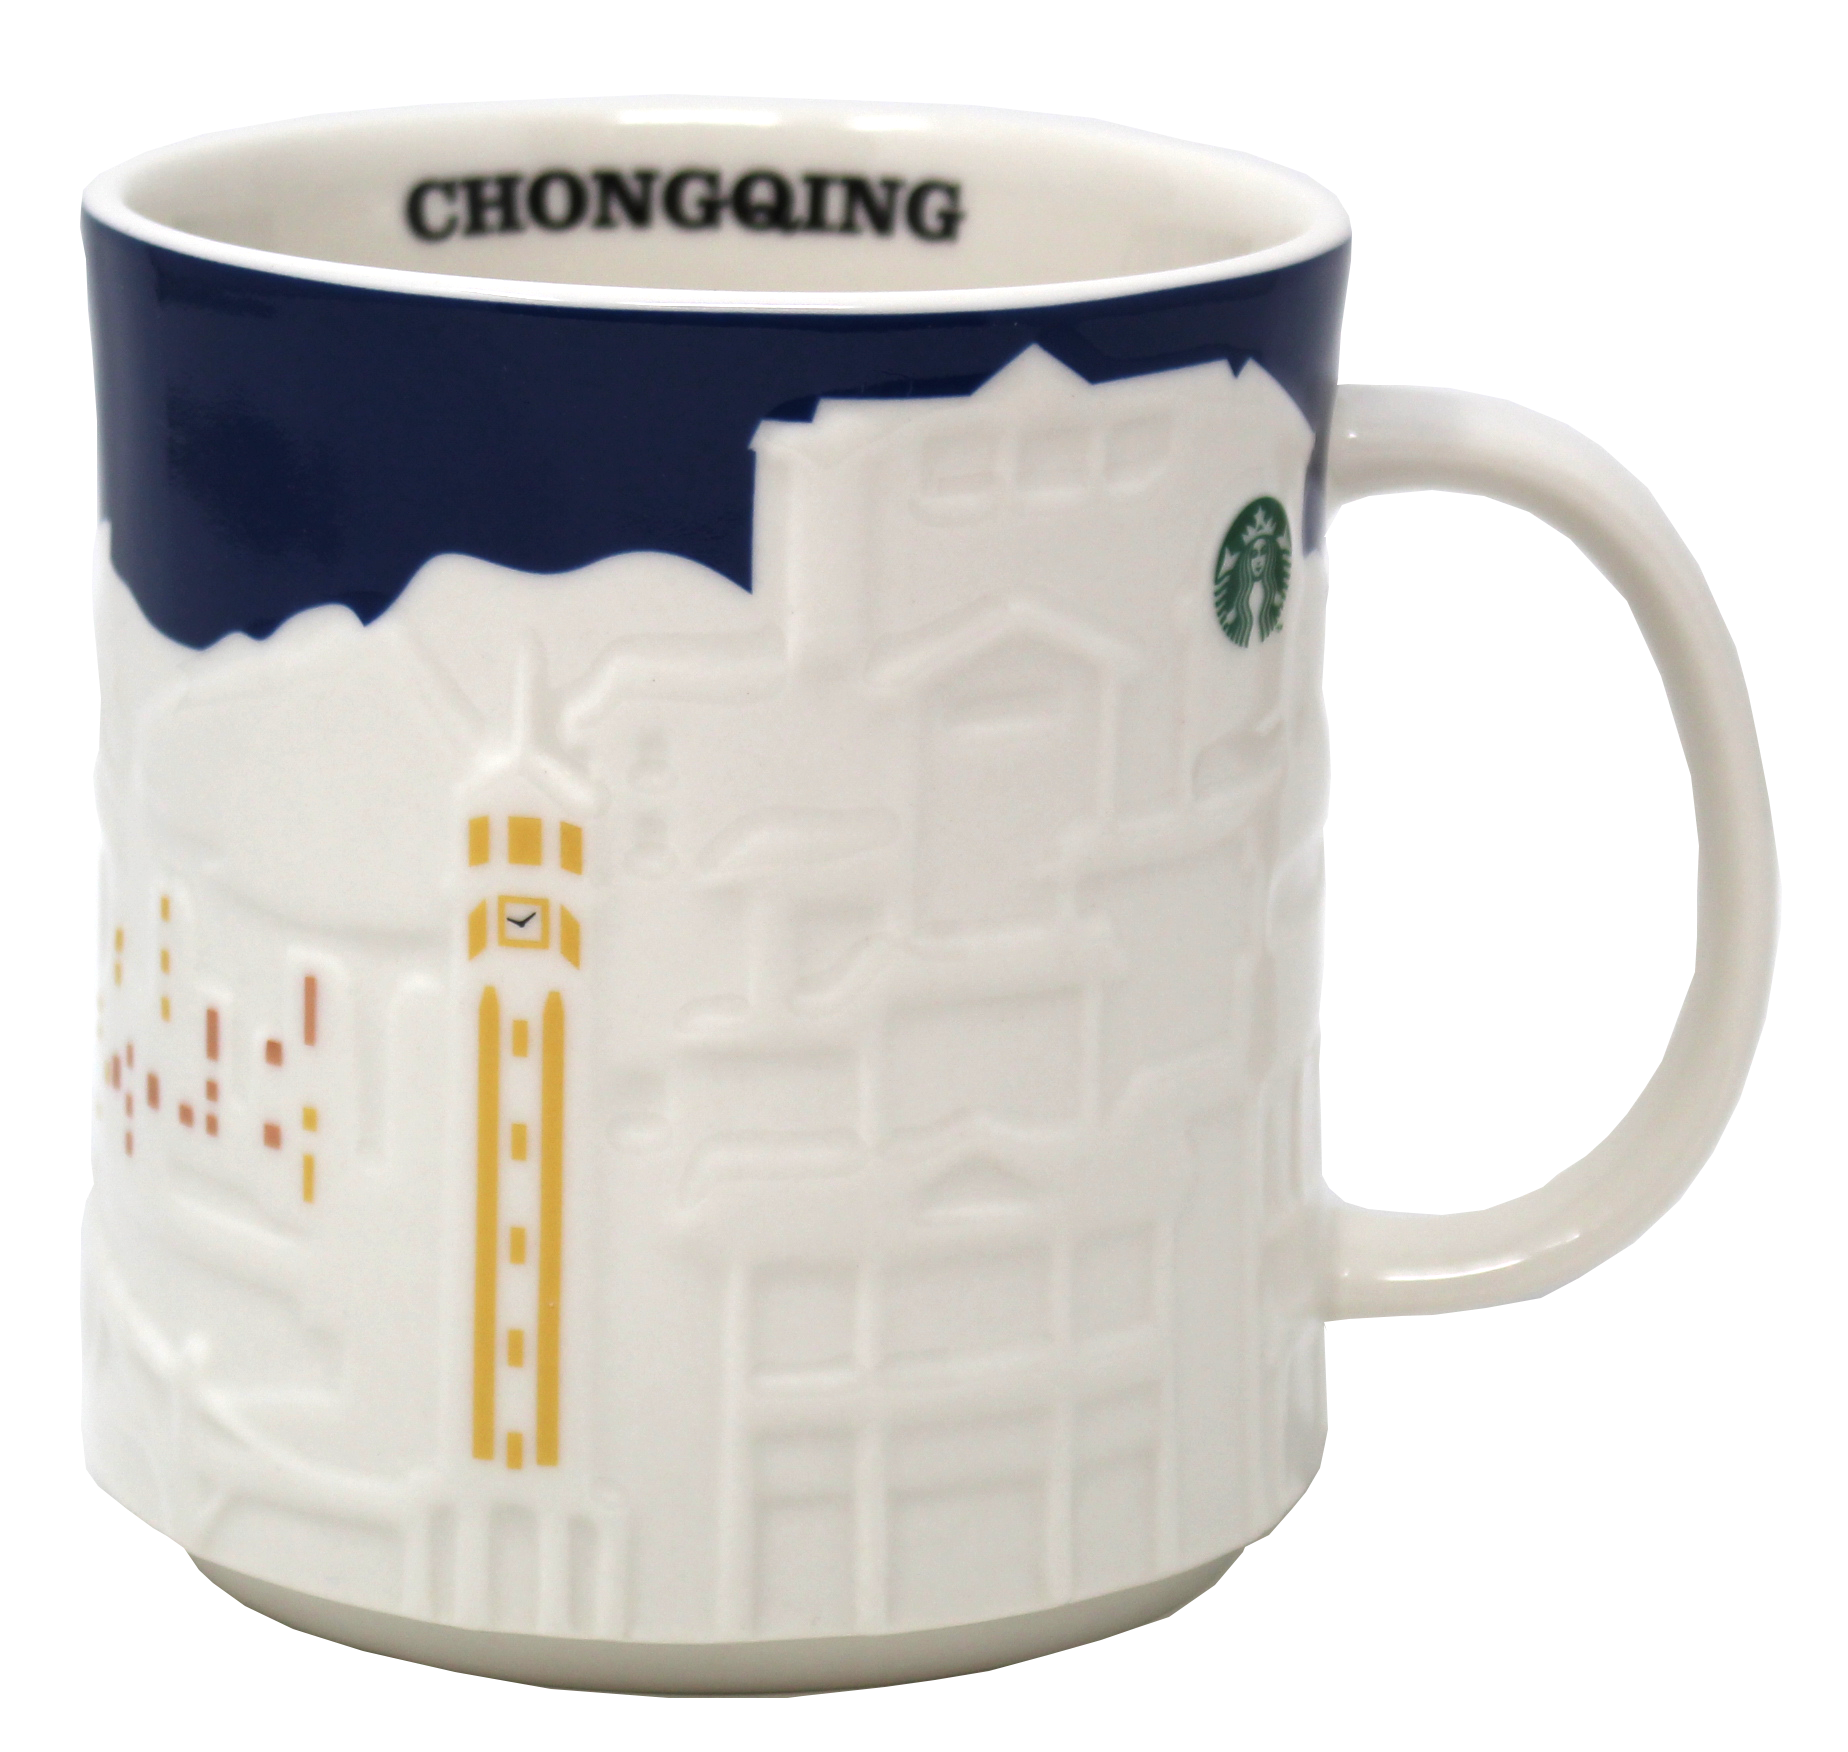 Starbucks Collector Relief Series Chongqing Ceramic Mug, 16 Oz